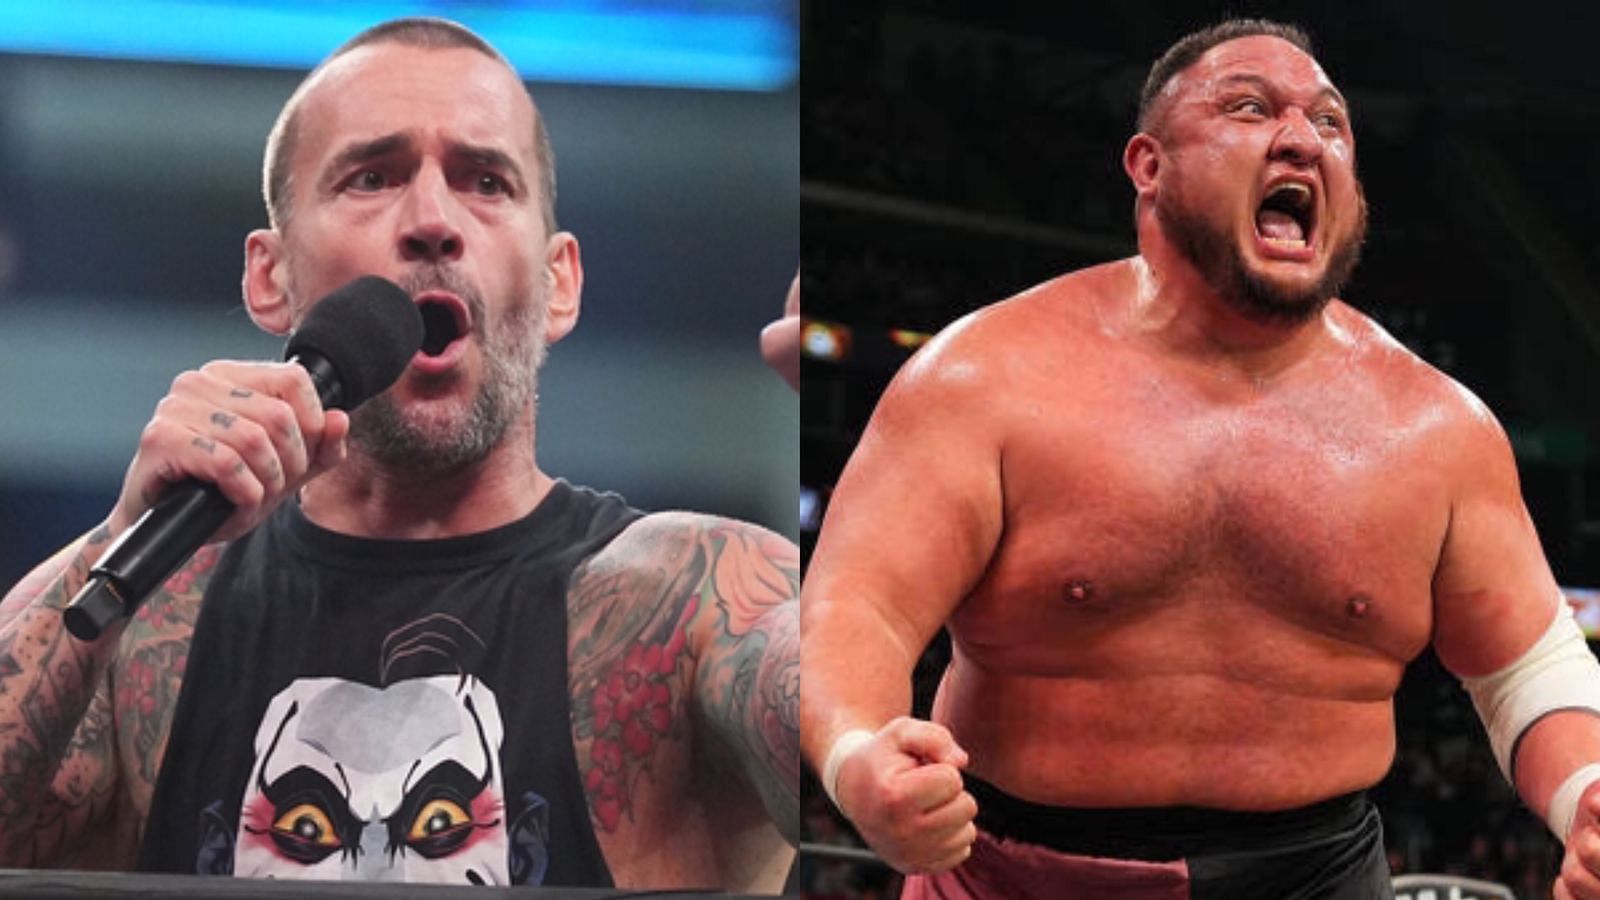 CM Punk will face Samoa Joe in the semi-finals of the Owen Hart Foundation Tournament